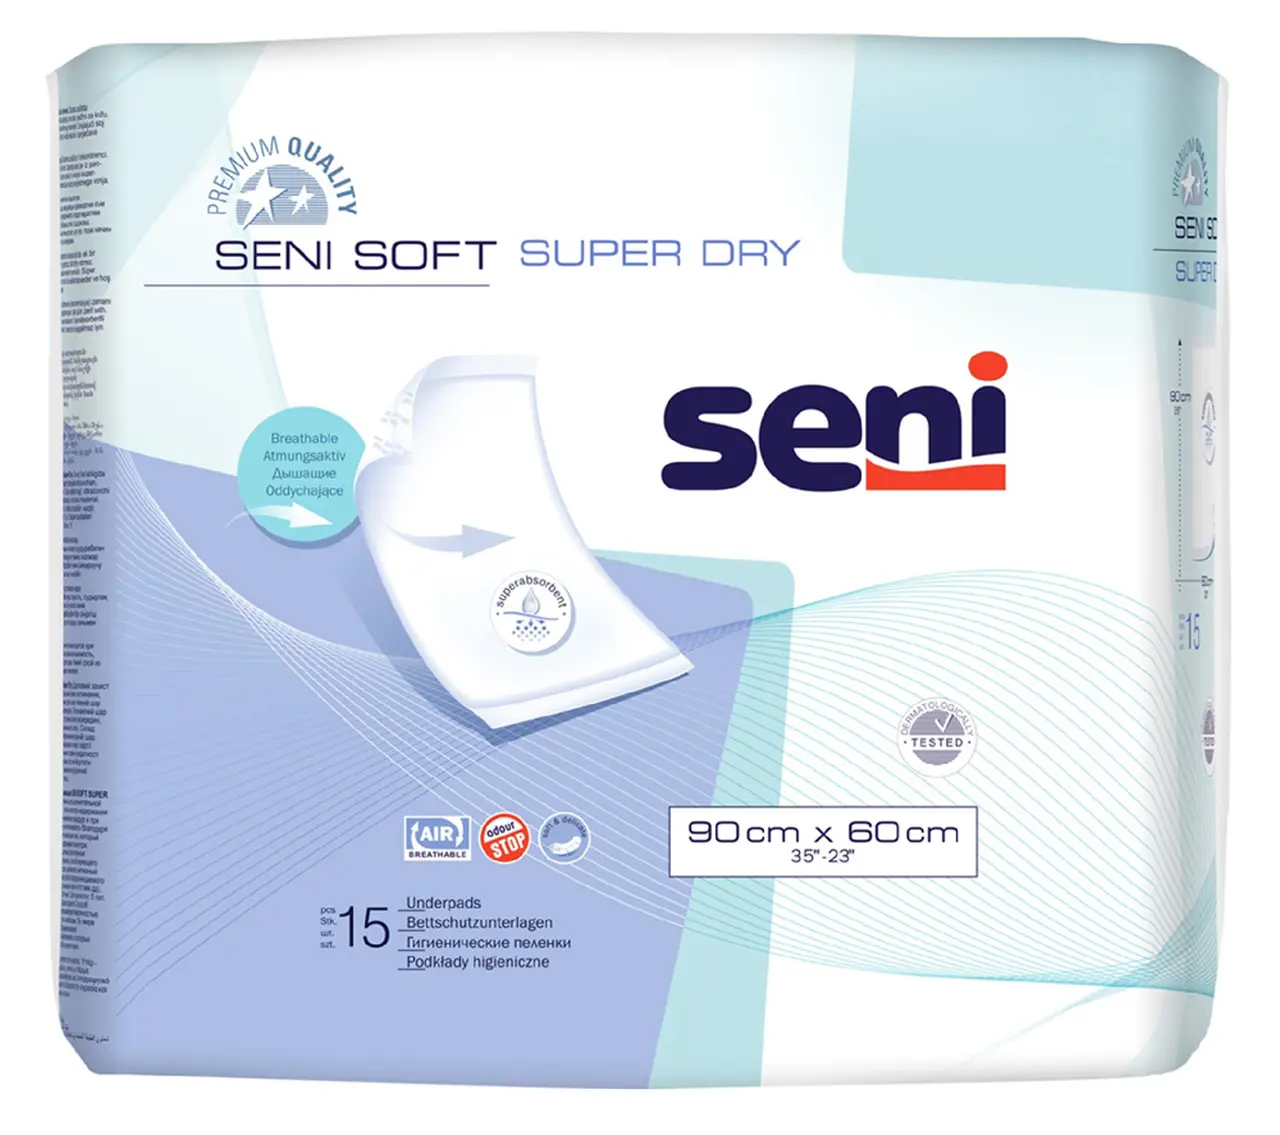 SENI Soft Super Dry Bettschutzunterlagen